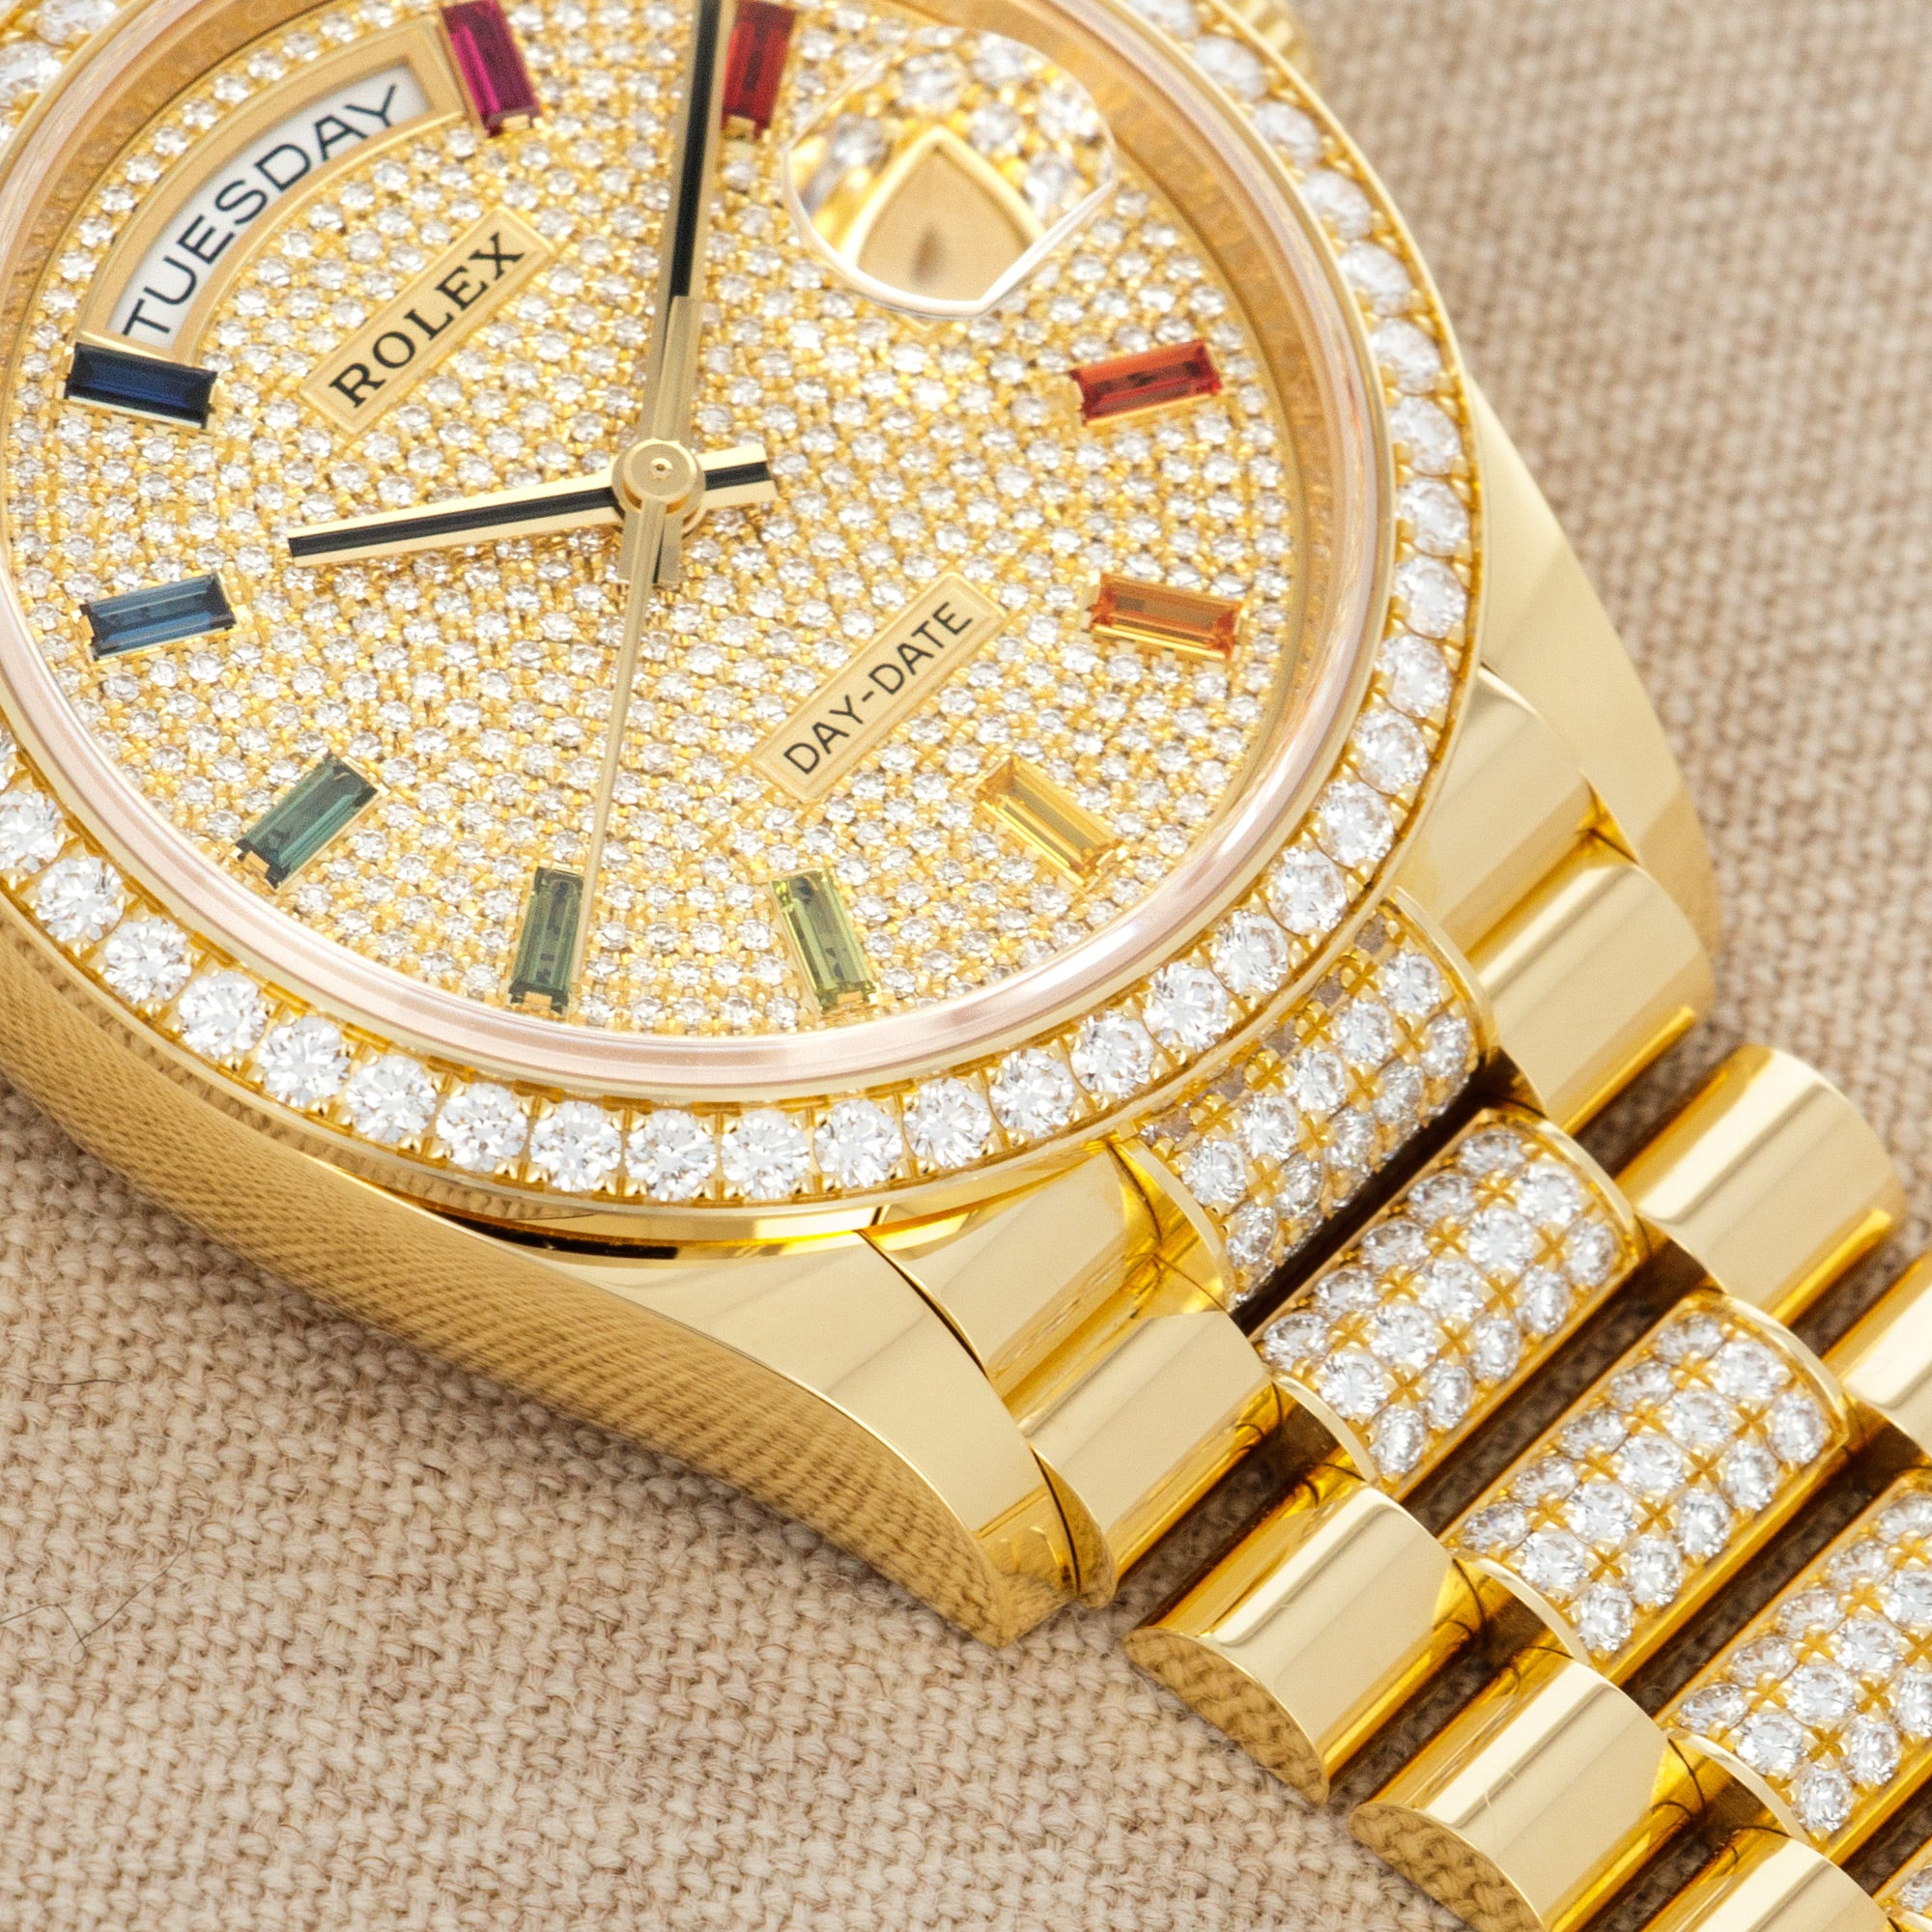 Rolex - Rolex Yellow Gold Day-Date Rainbow Watch Ref. 128348 - The Keystone Watches